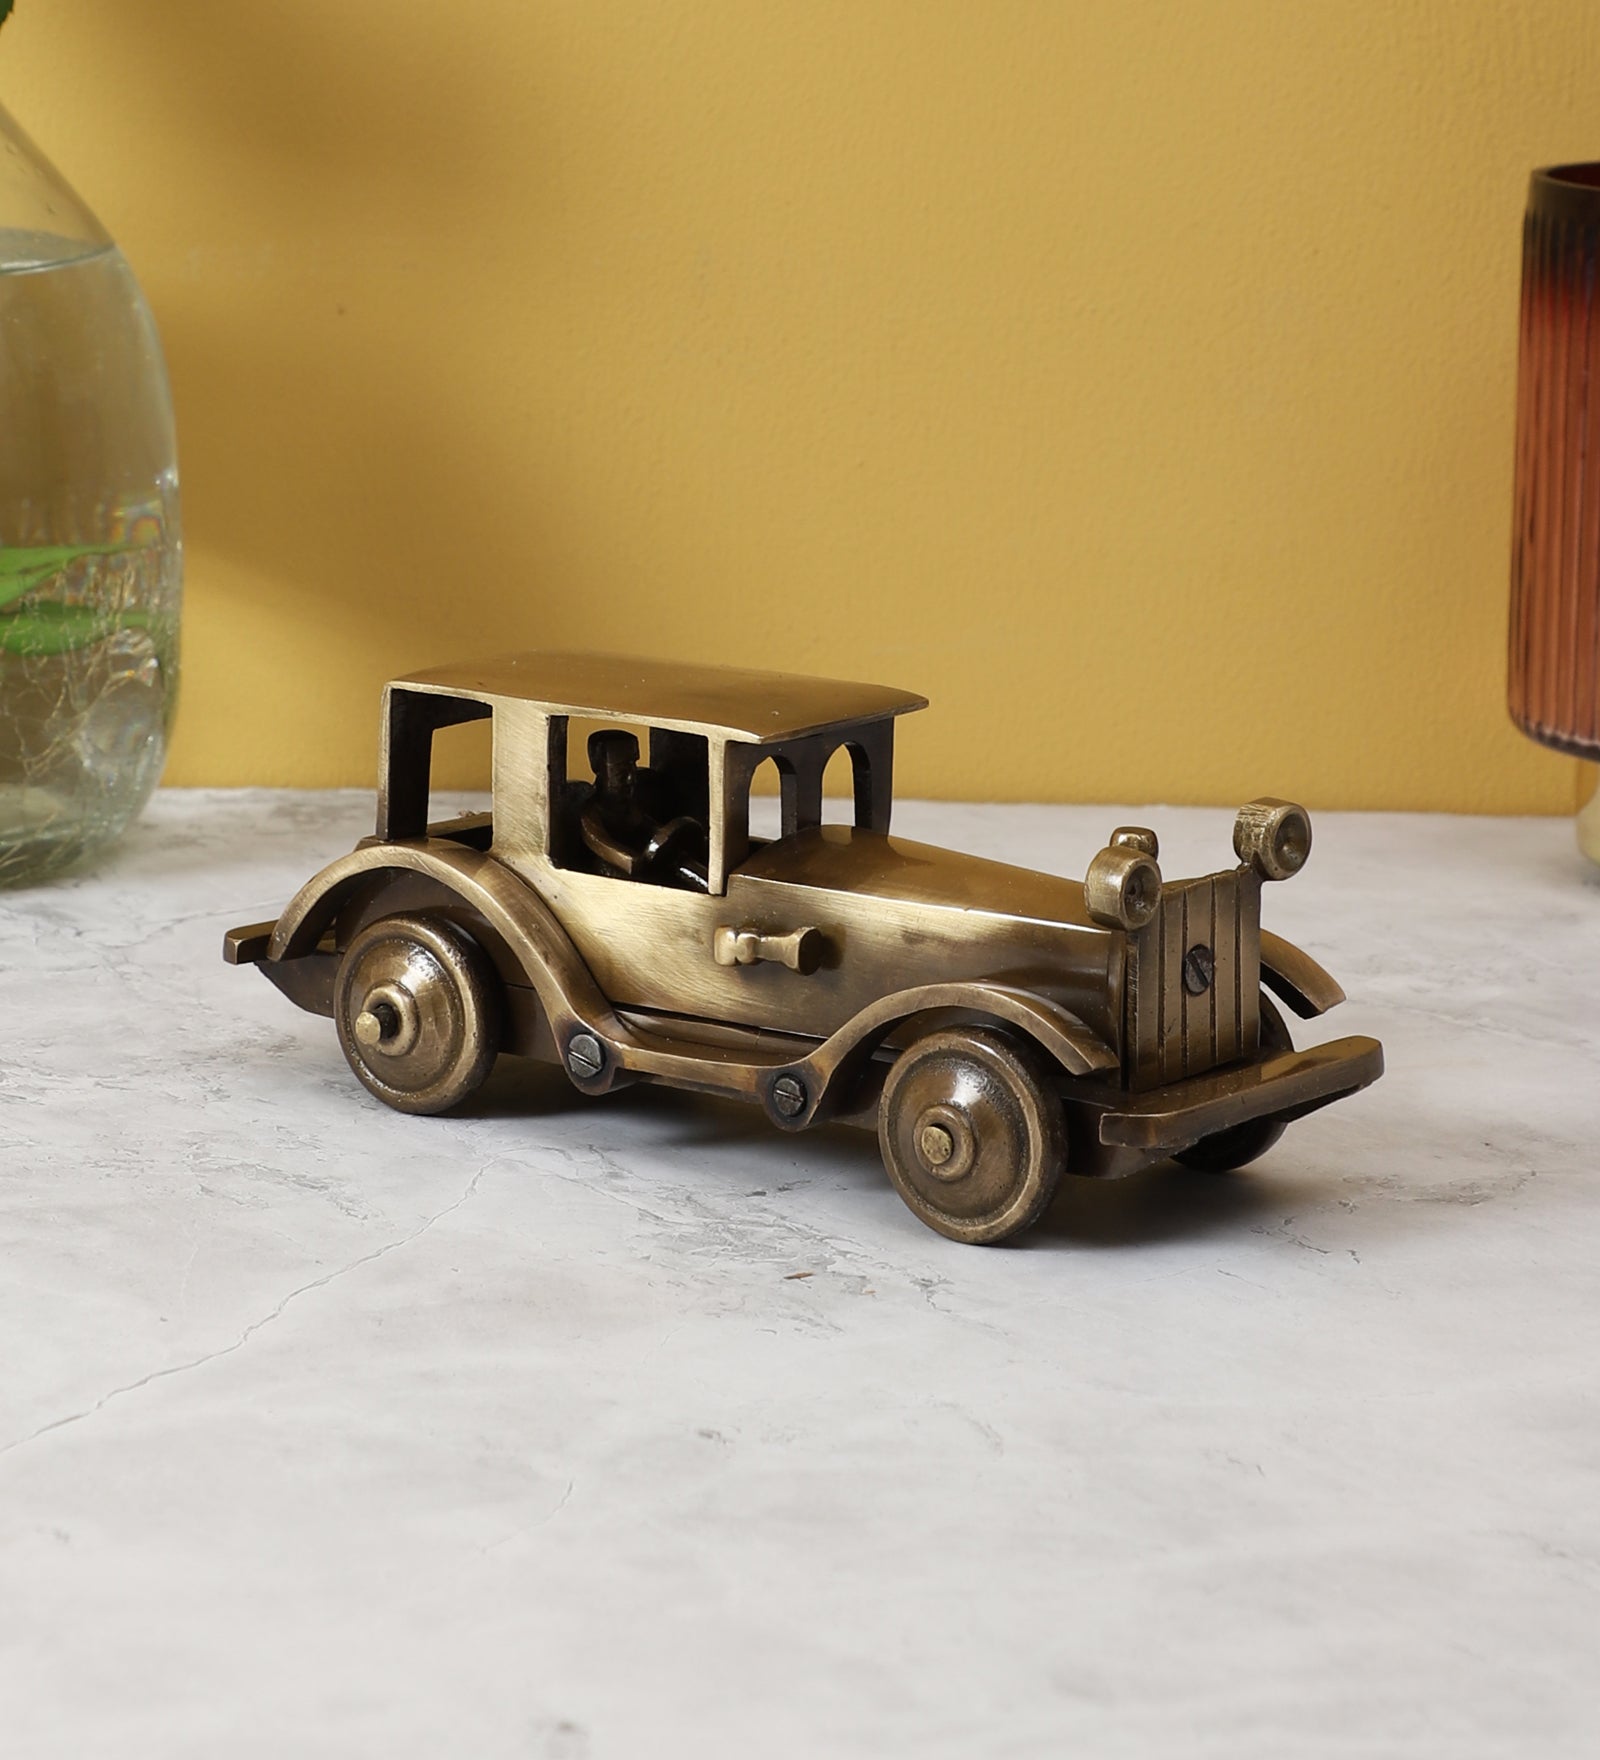 Brass Vintage Motor Car Showpiece, Figurine for Home Decor